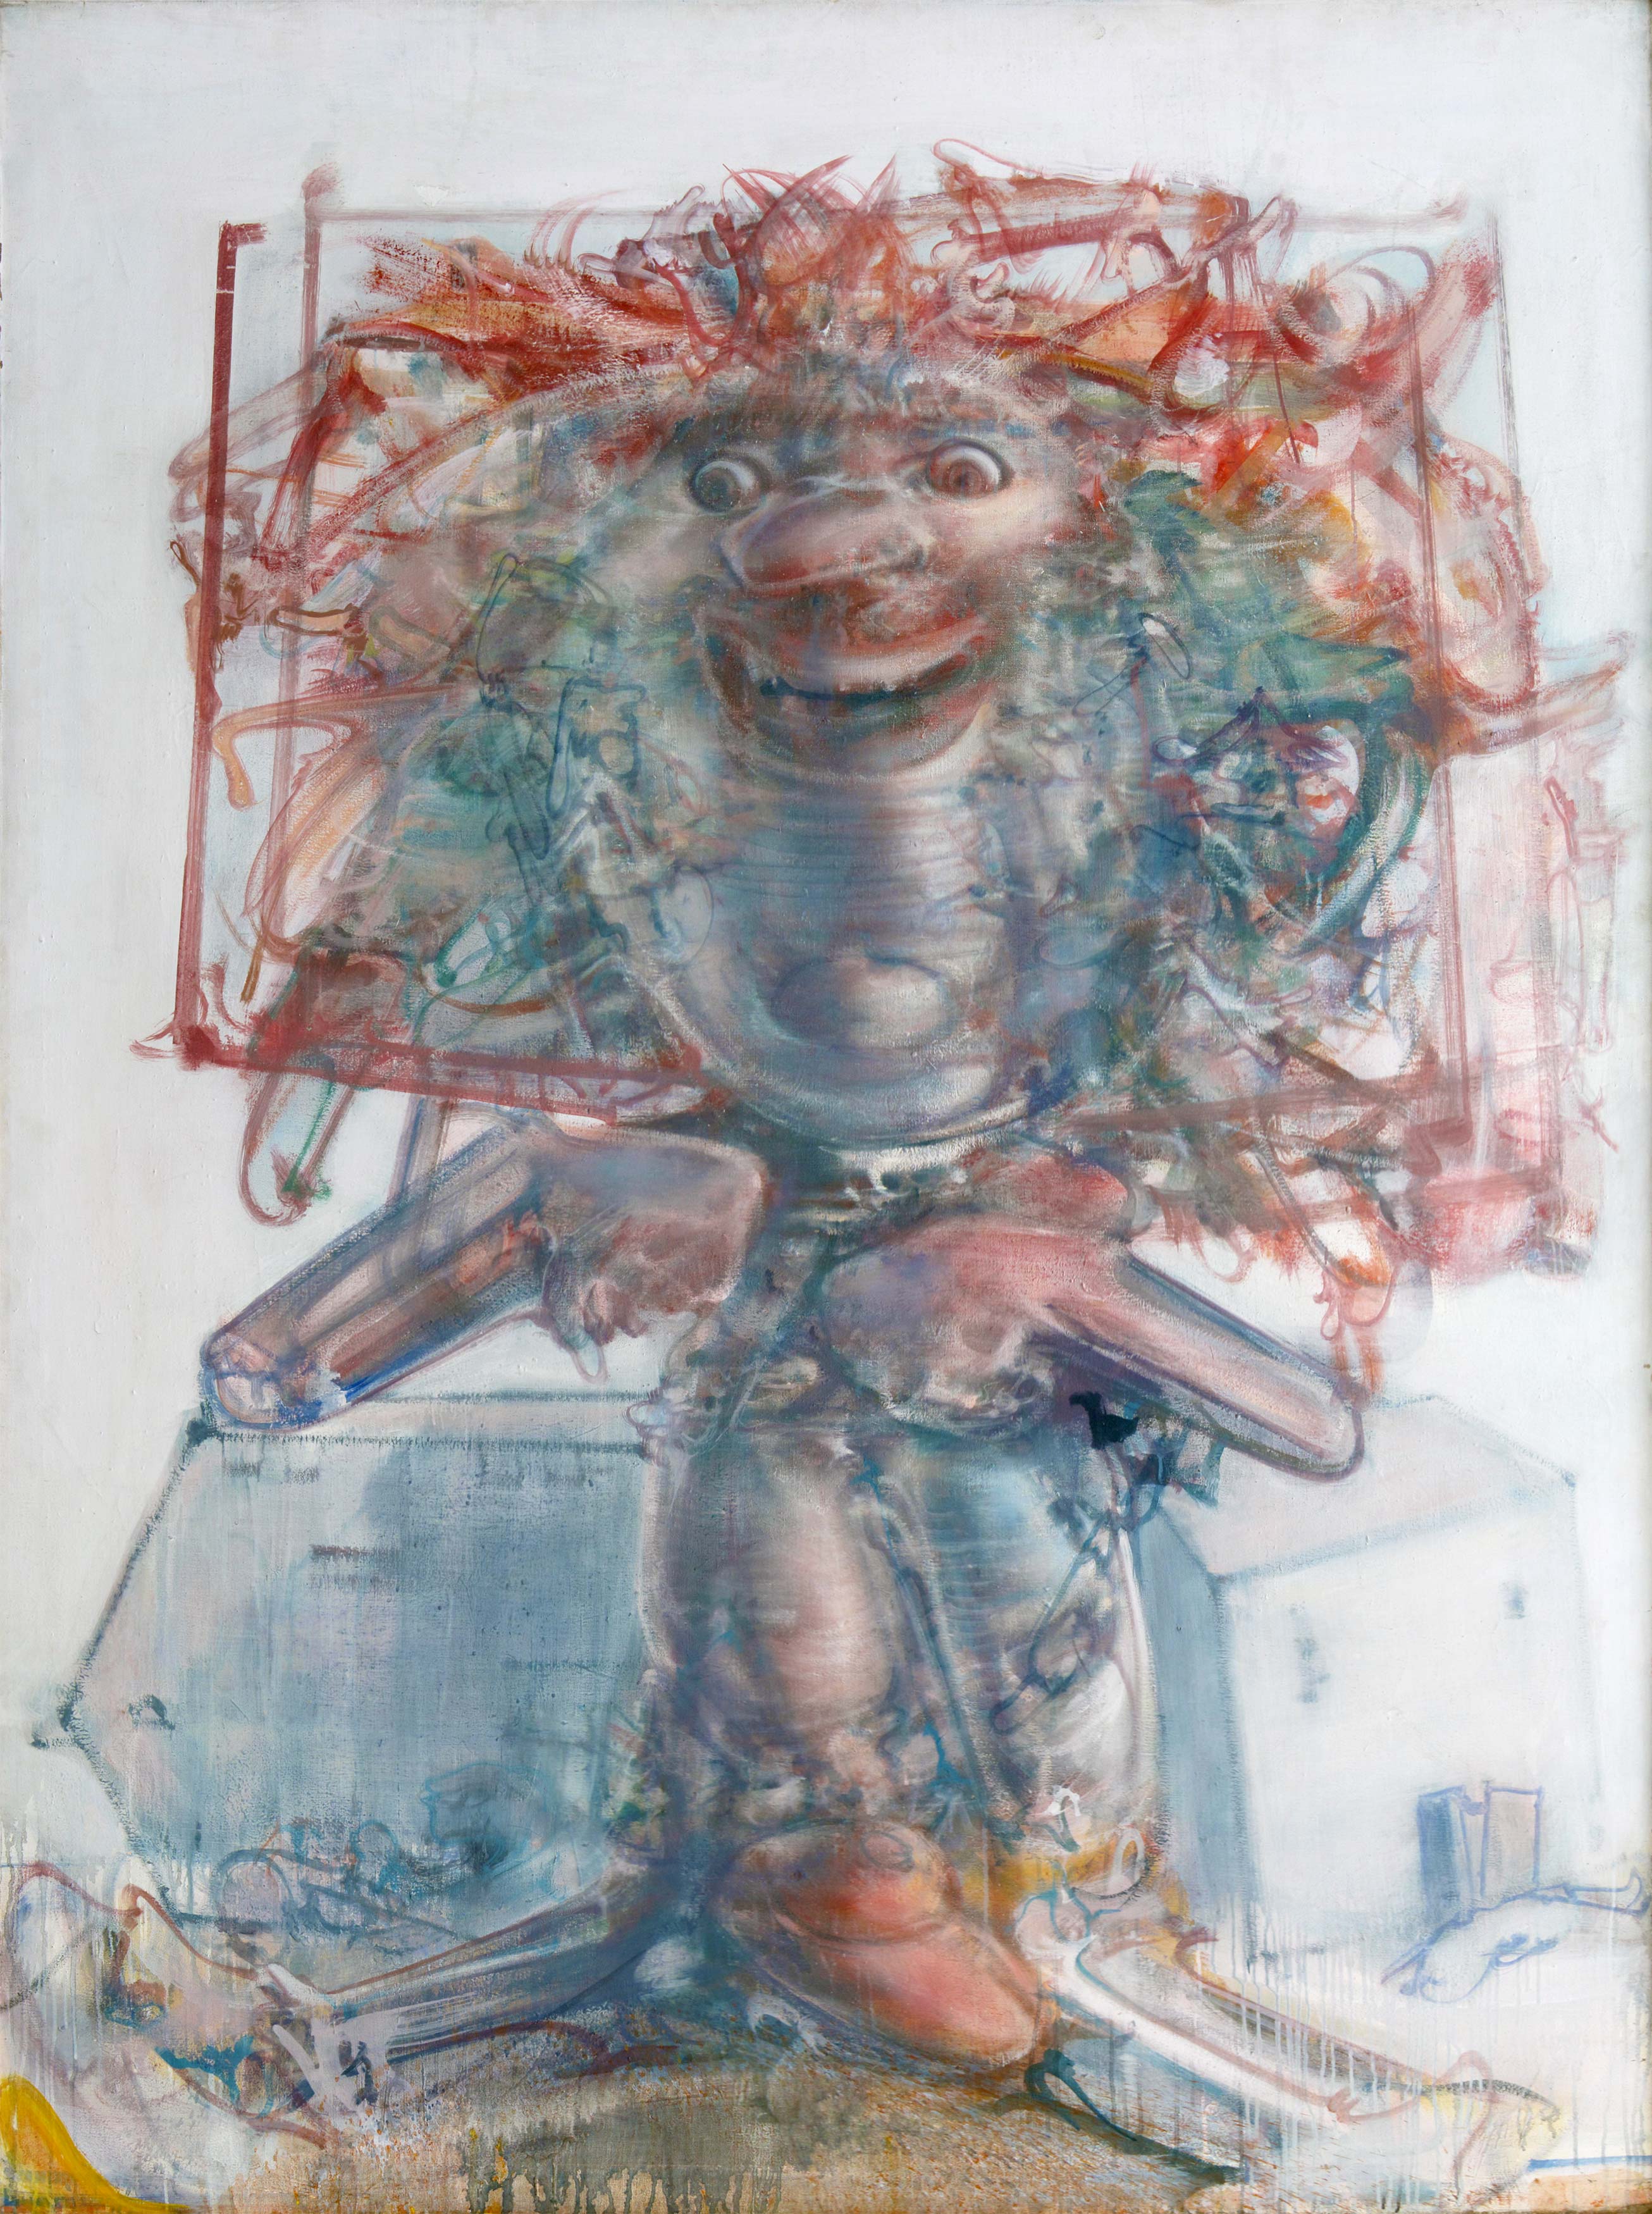 Dado: MPF, 1996, oil on canvas, 200 × 150 cm